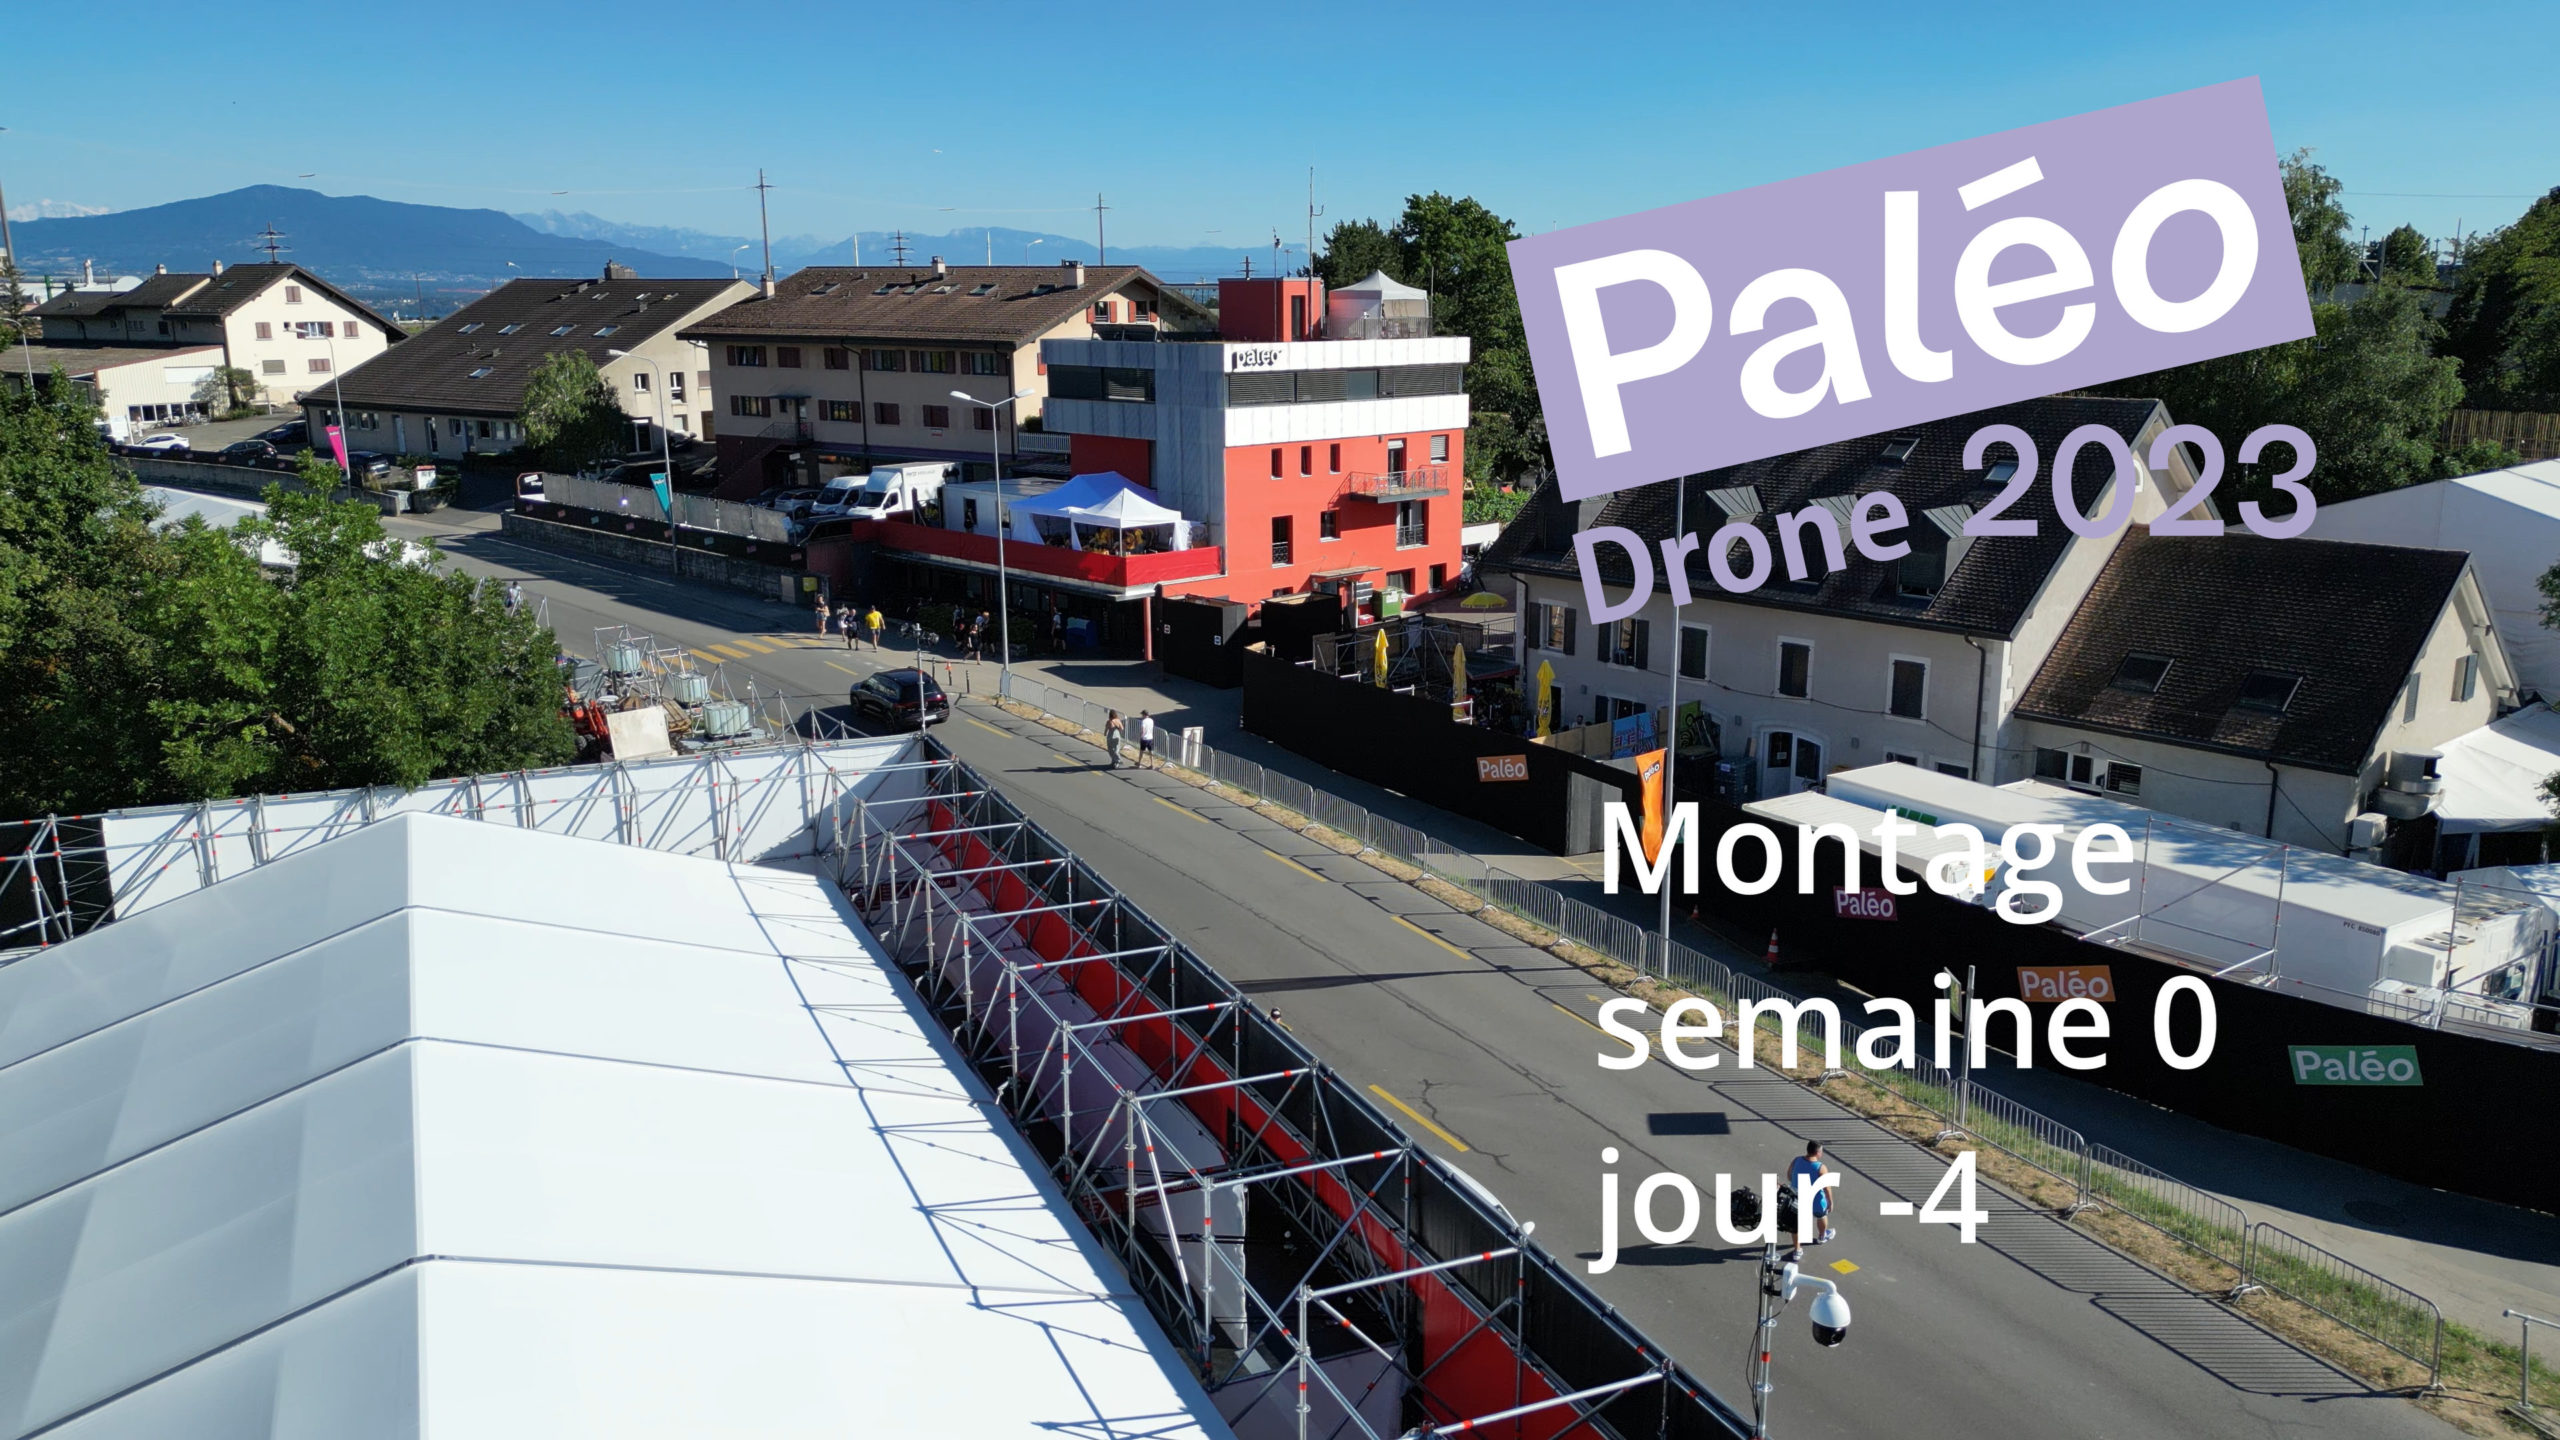 Drone #08 paleo 2023 semaine -0 jour -4